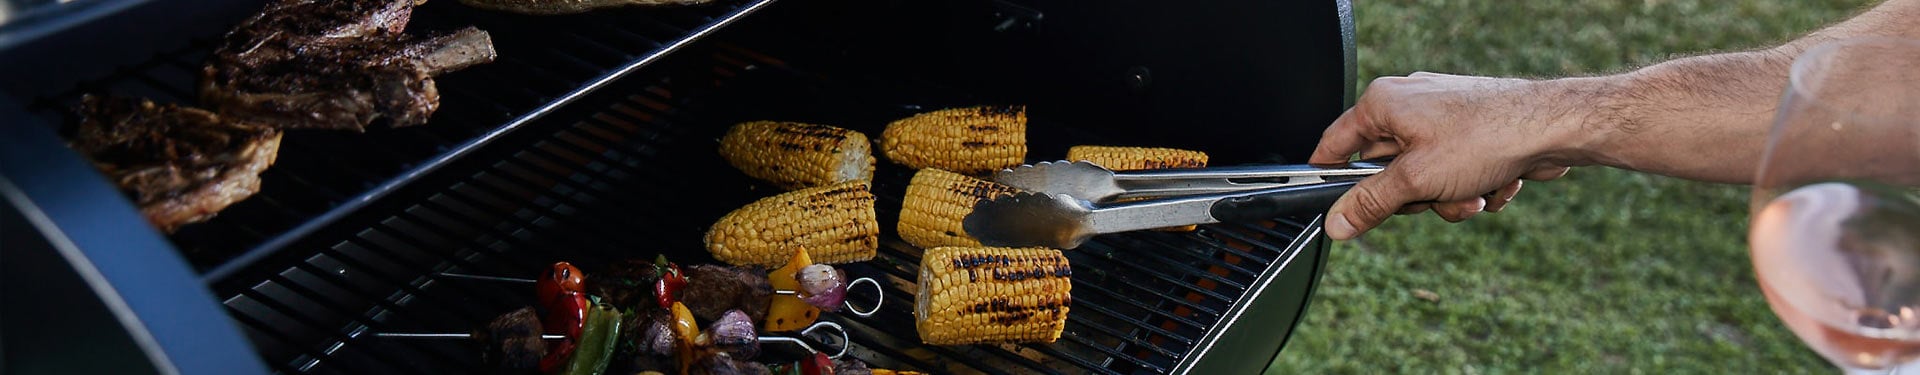 BBQ grilled corn